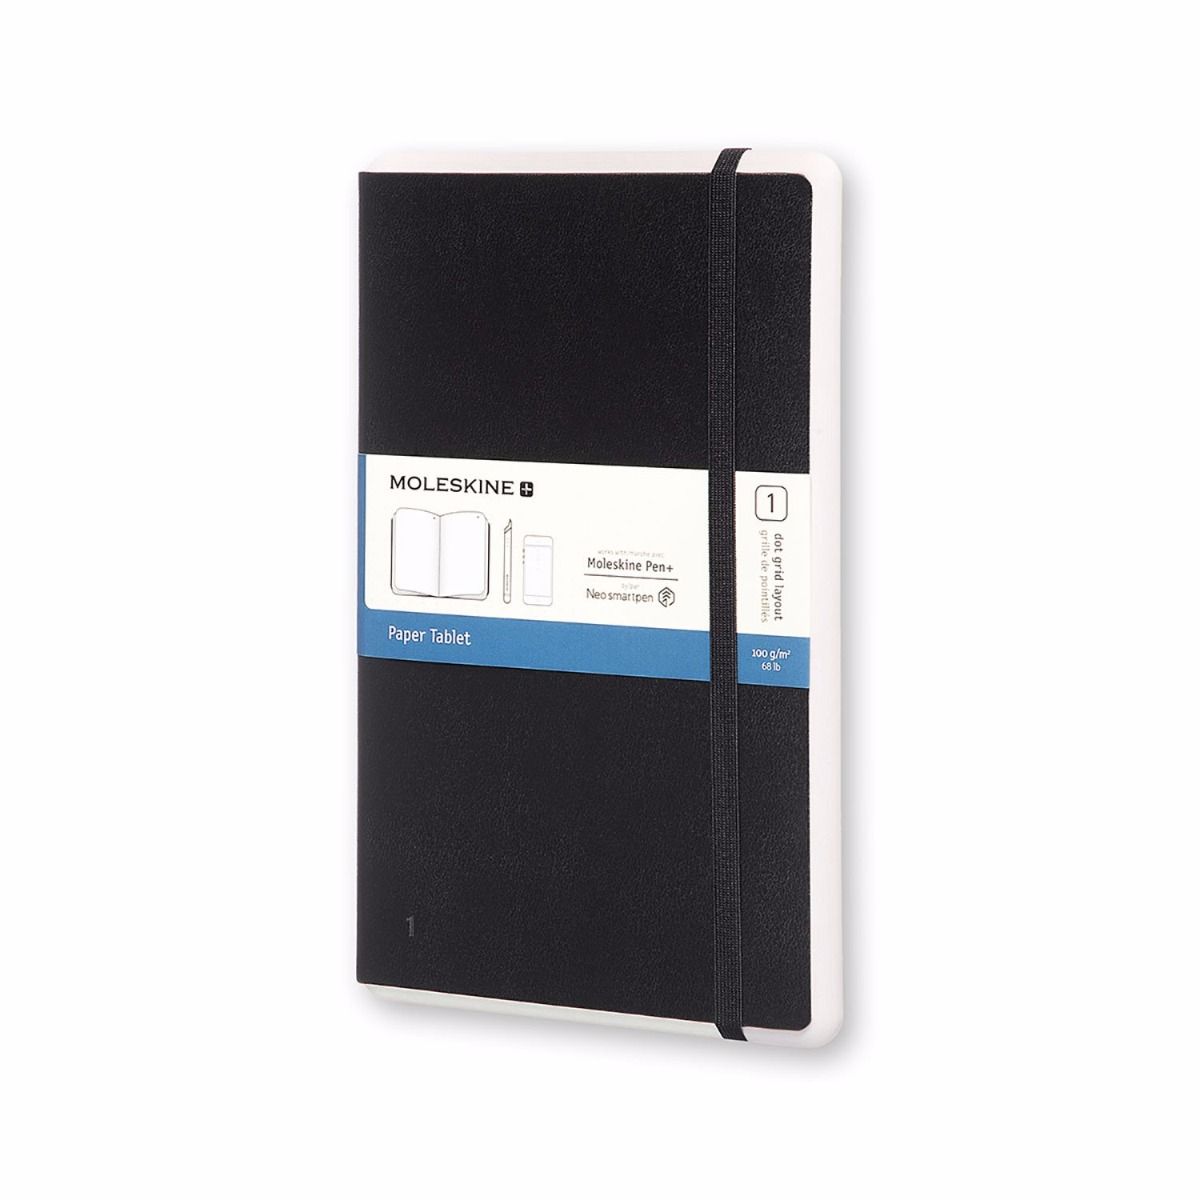 Moleskine Smart Writing System Paper Tablet Dotted Hard Cover Large - Black